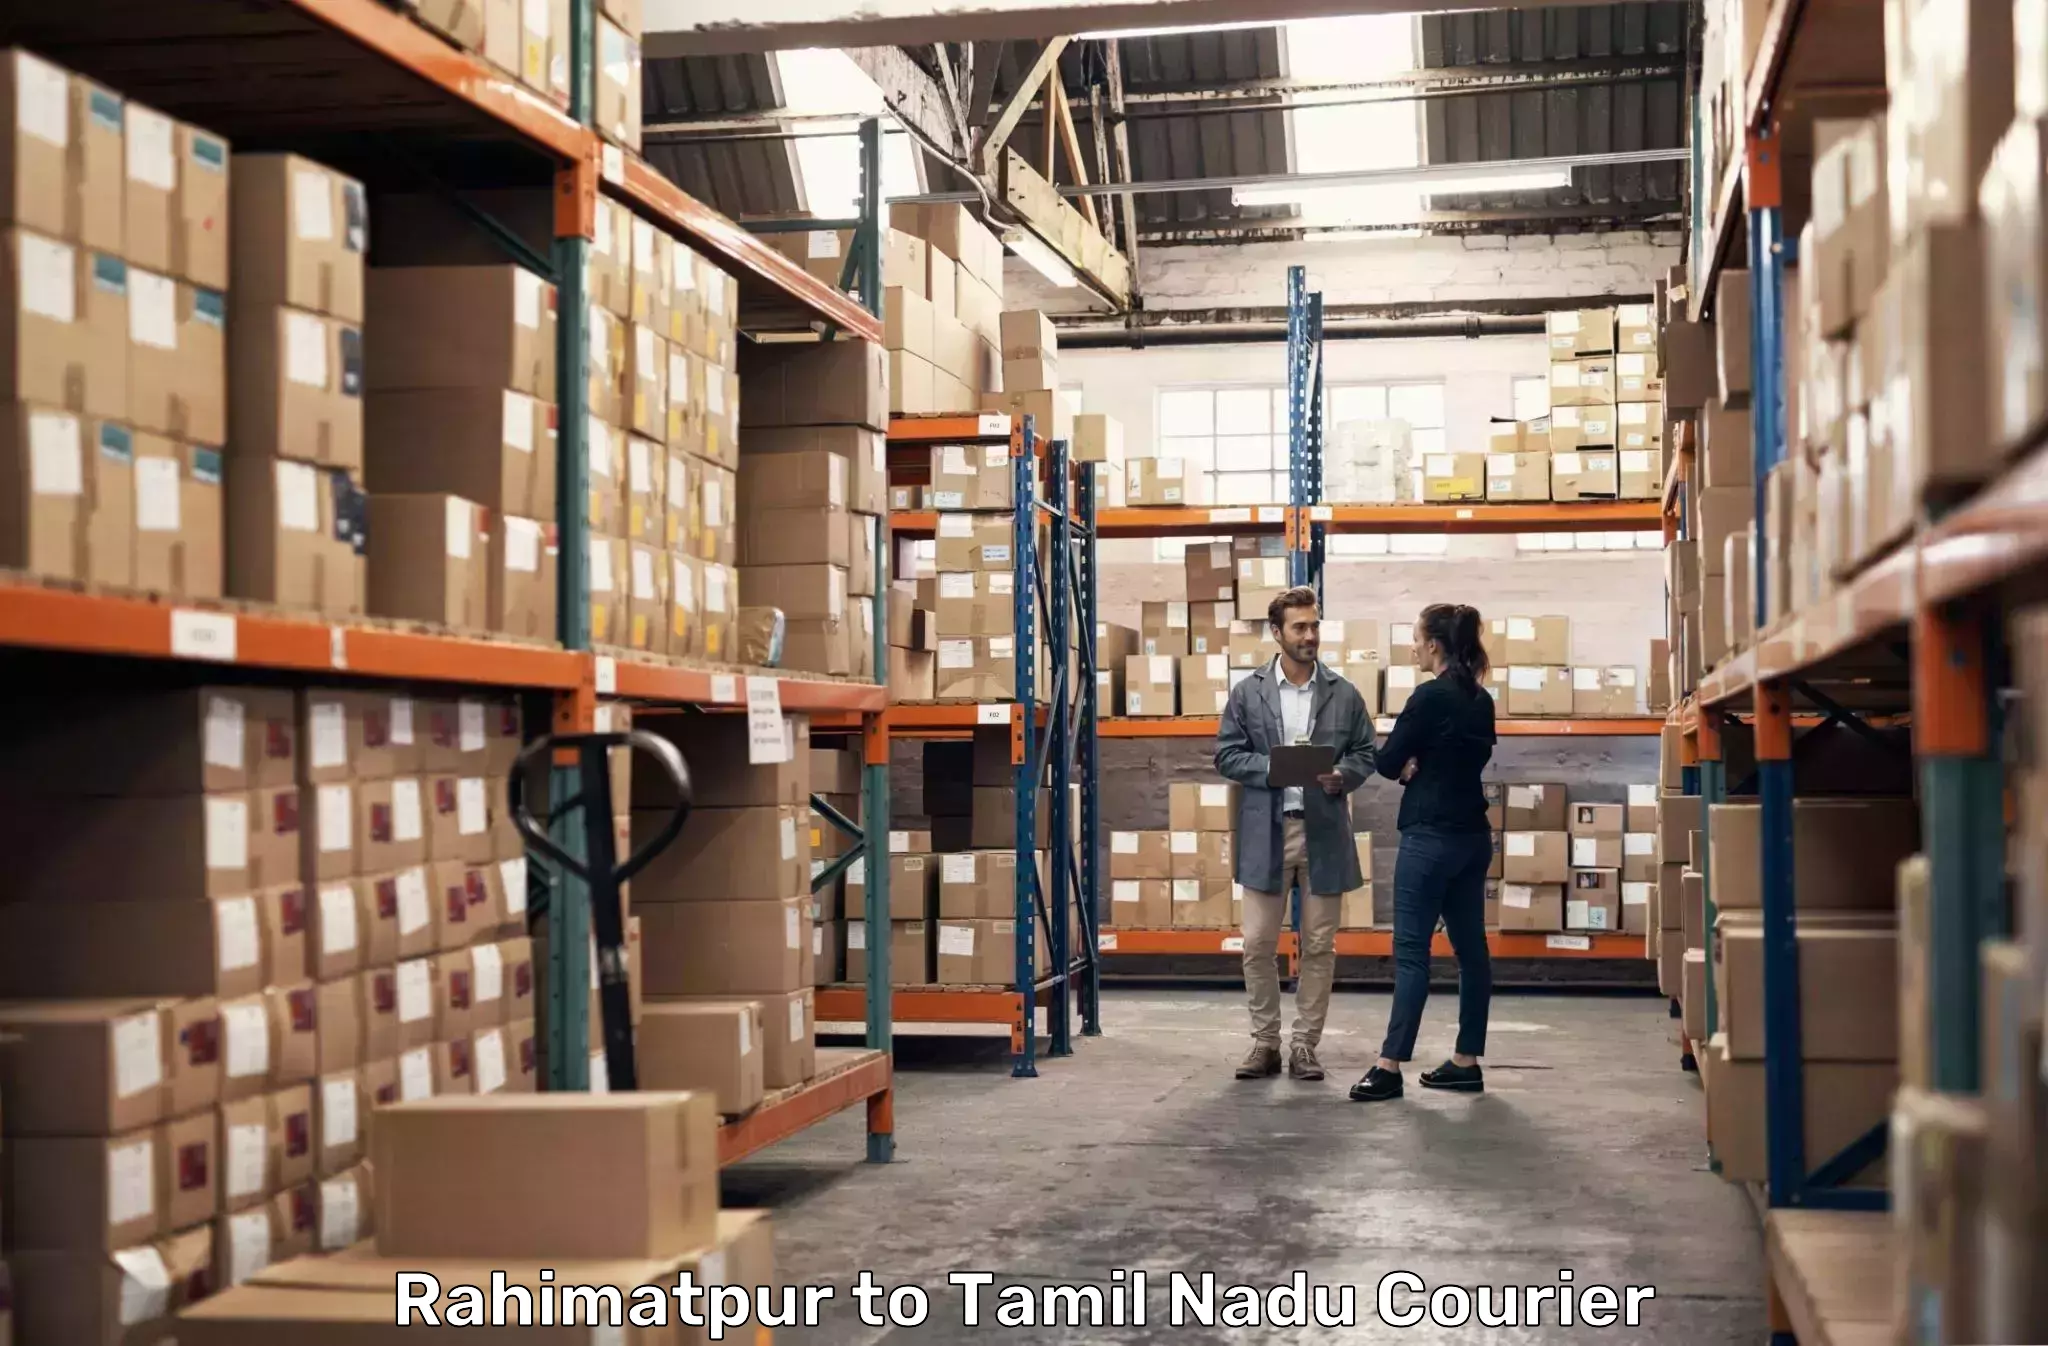 Courier service innovation Rahimatpur to Tamil Nadu